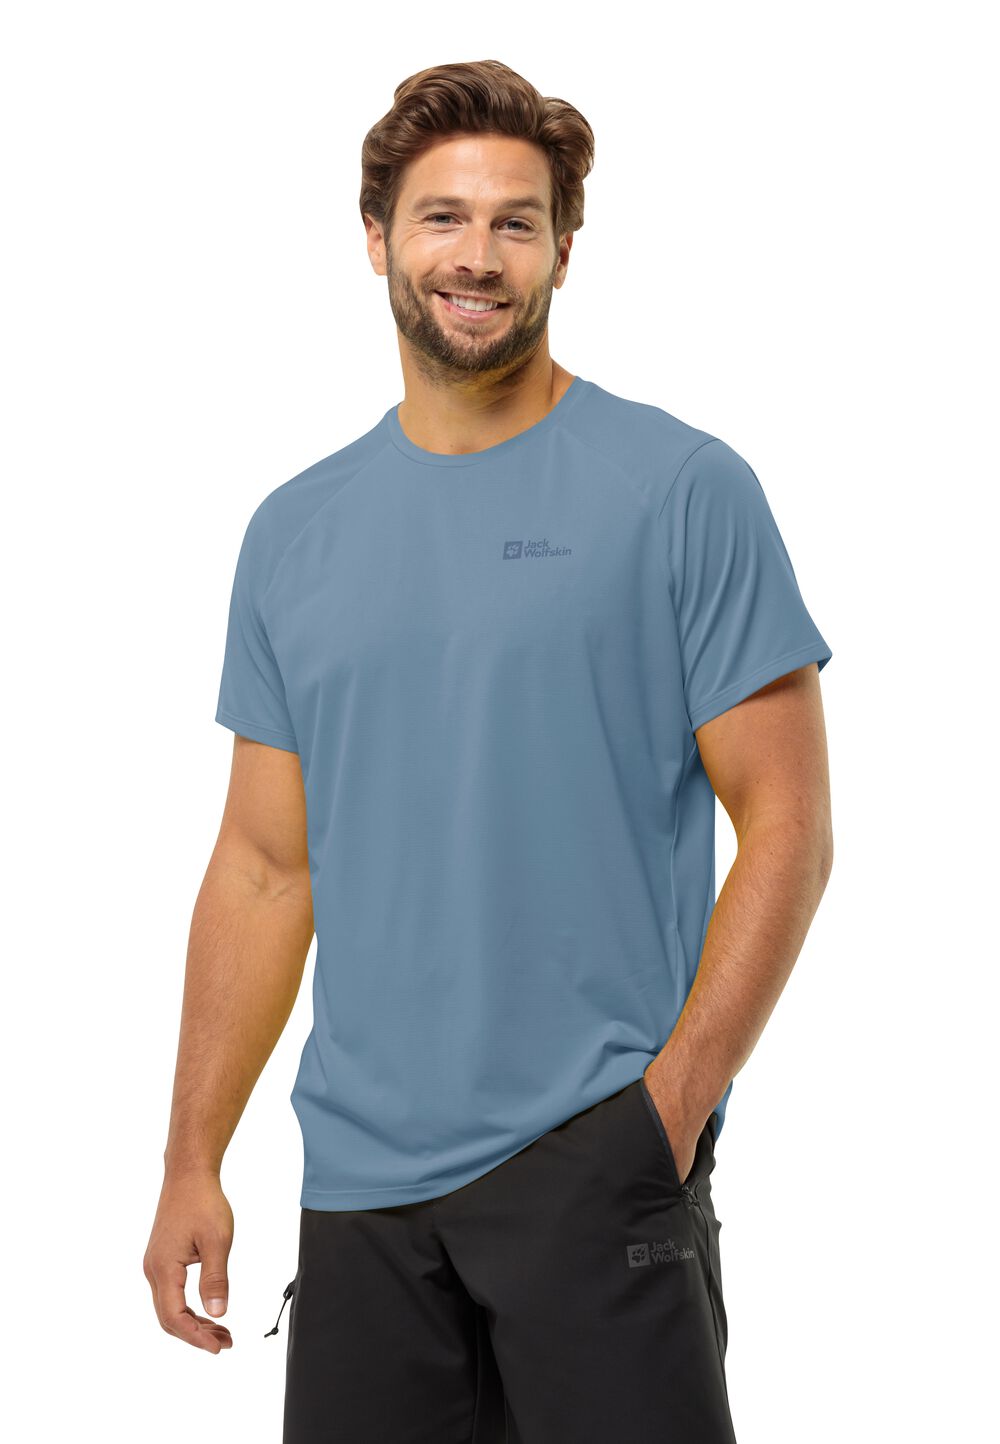 Jack Wolfskin Prelight Trail T-Shirt Men Functioneel shirt Heren XXL elemental blue elemental blue